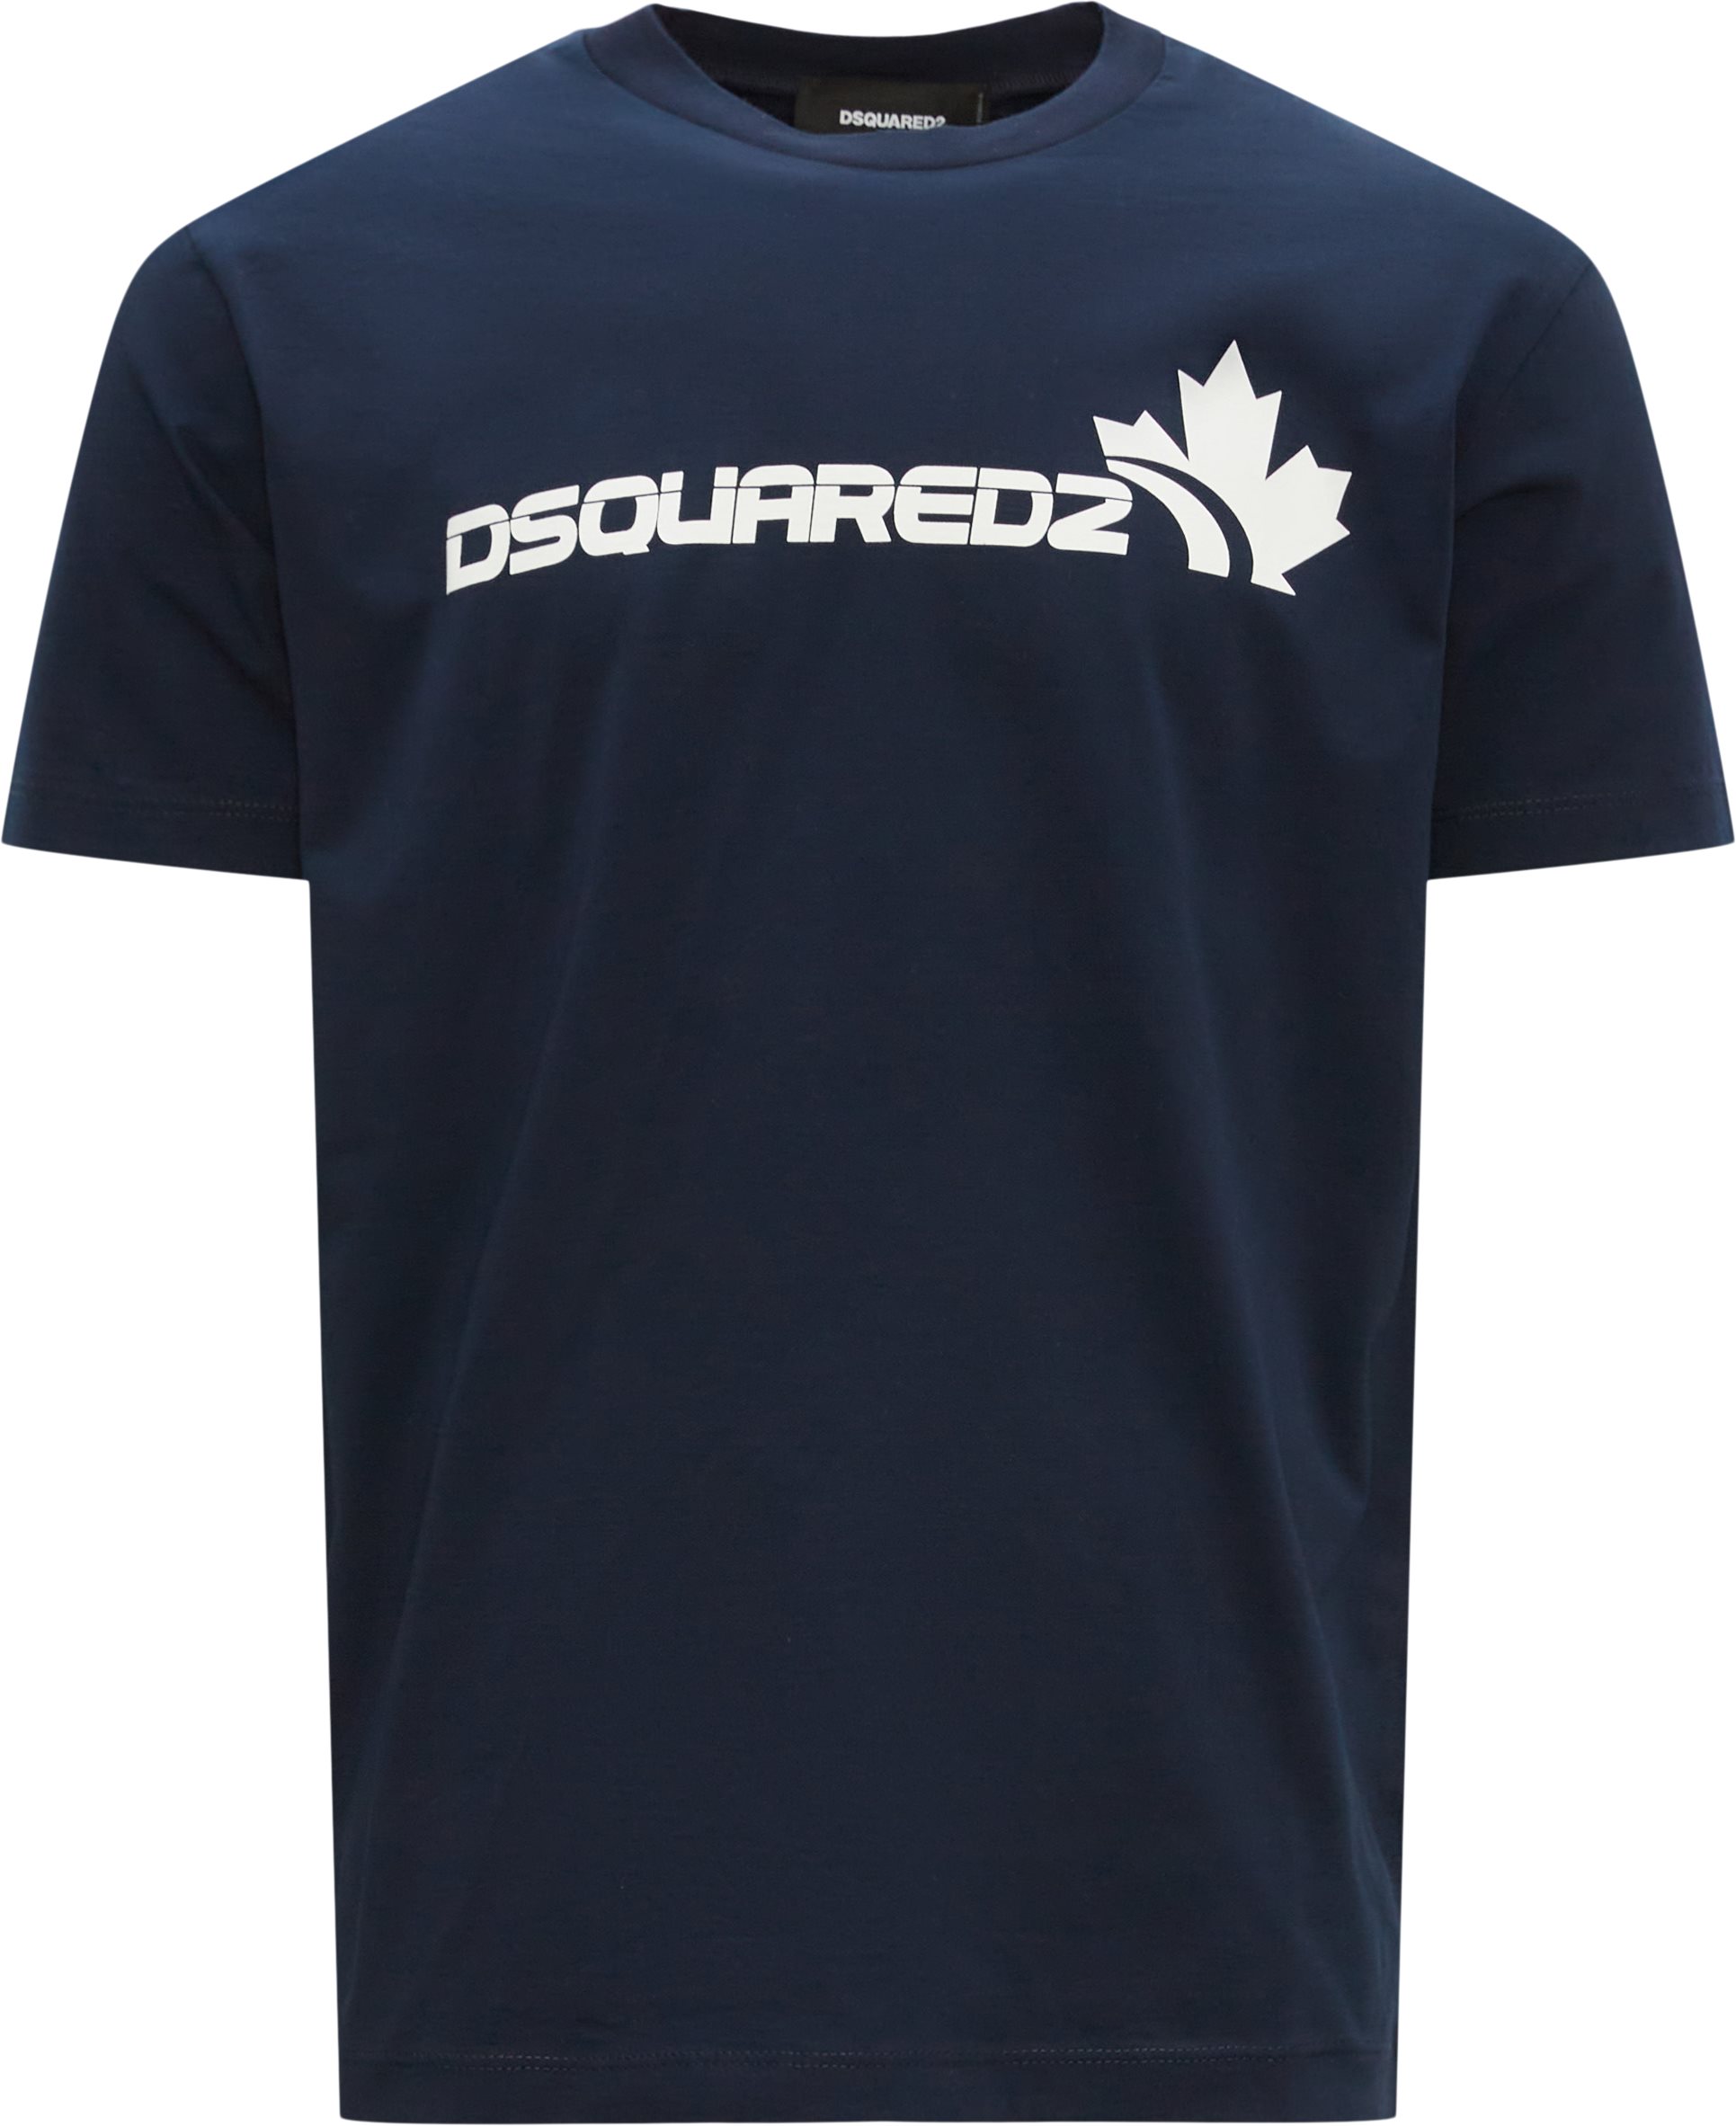 Dsquared2 T-shirts S71GD1278 S23009 Blå